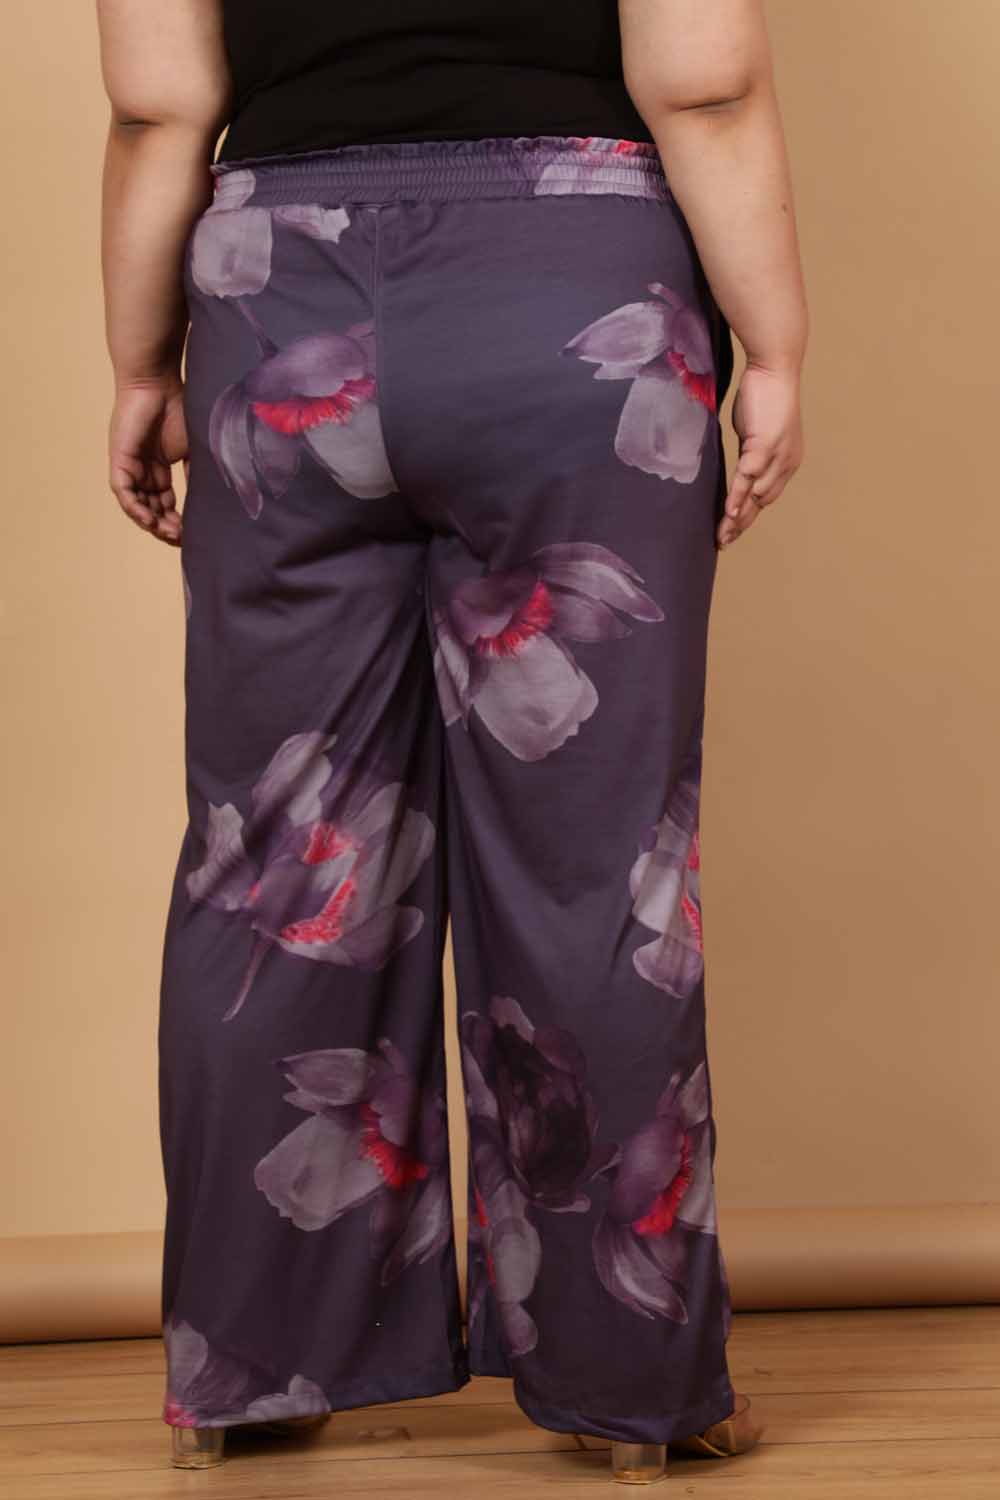 Plus Size Purple Floral Printed High Waist Pants